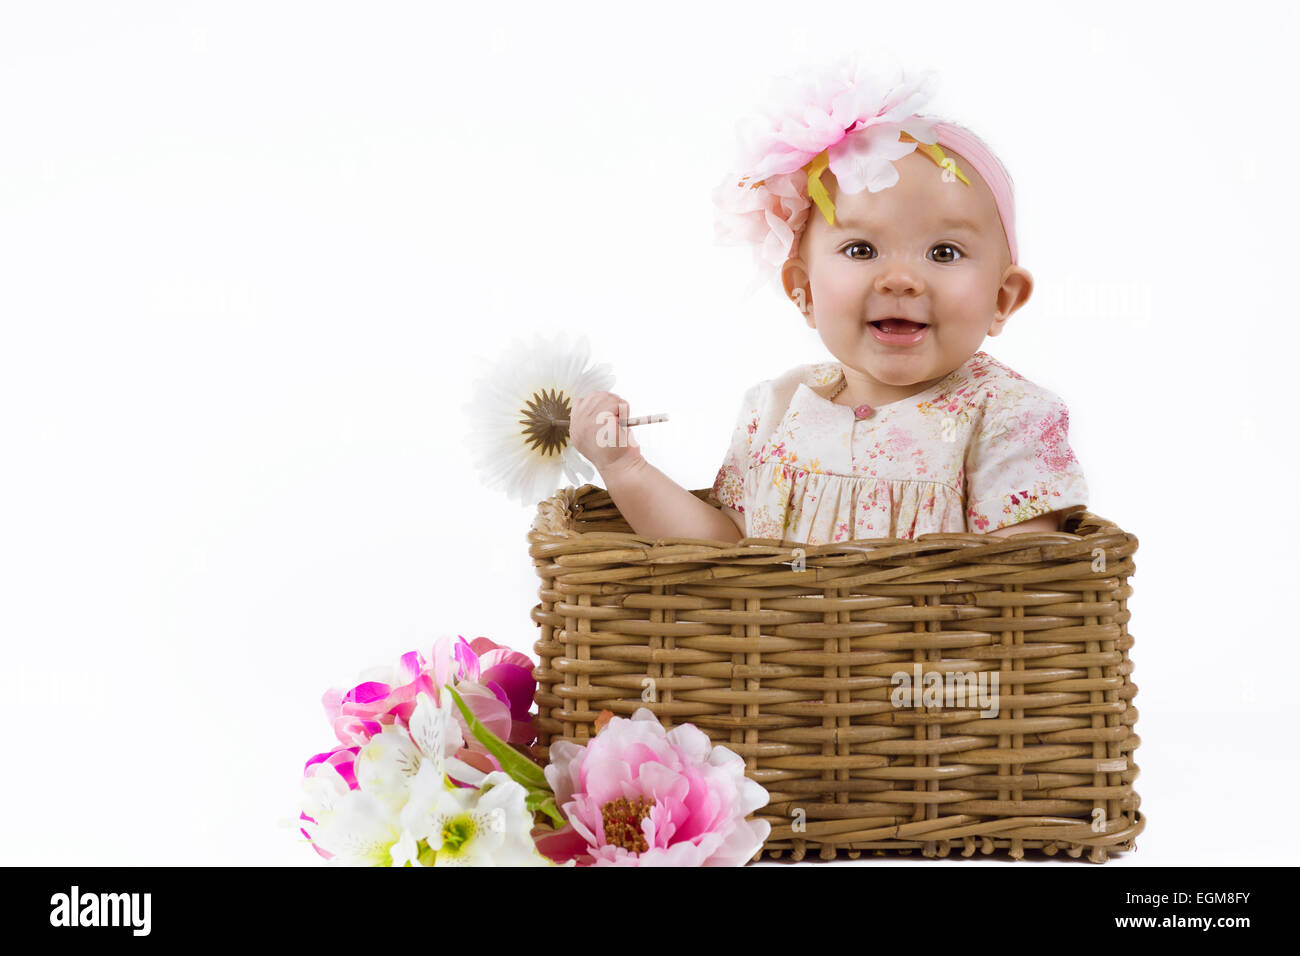 cute baby in a flower dress sitting in a flower basket Stock Photo